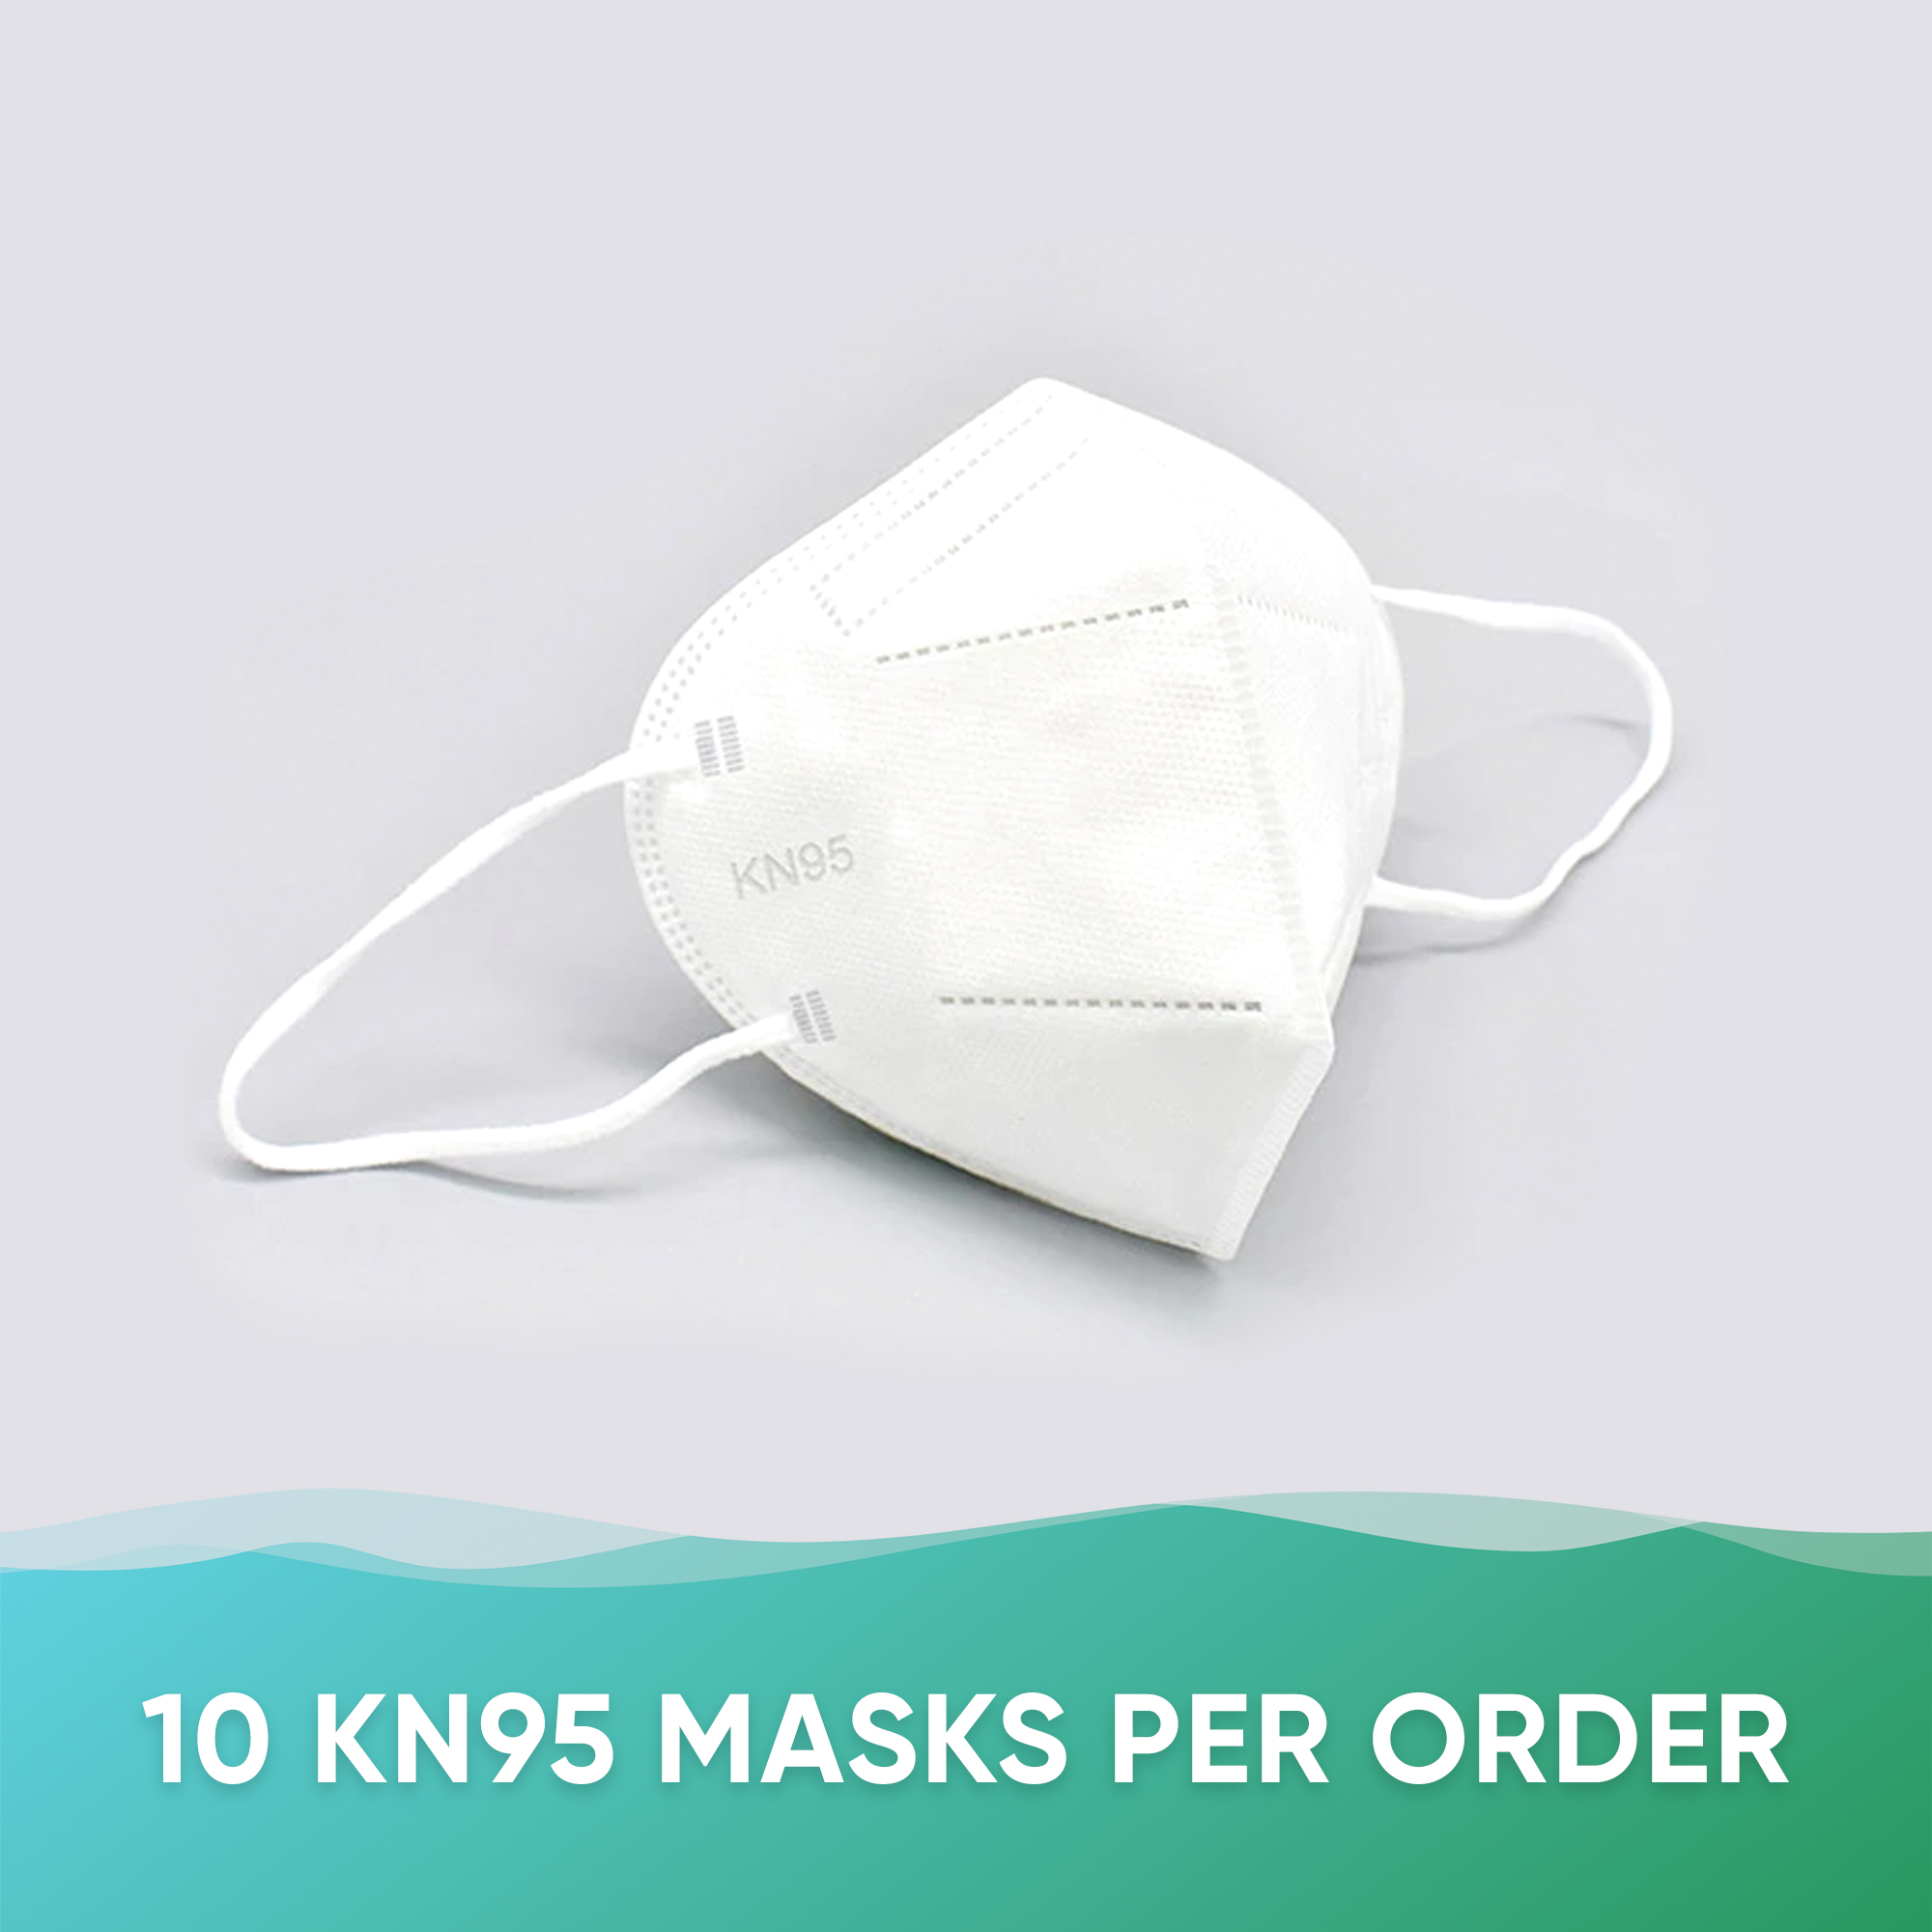 AnDum KN95 Face Masks - 10 Per Order - AnDum Brand Model AD-1005 KN95 Respirator Face Masks